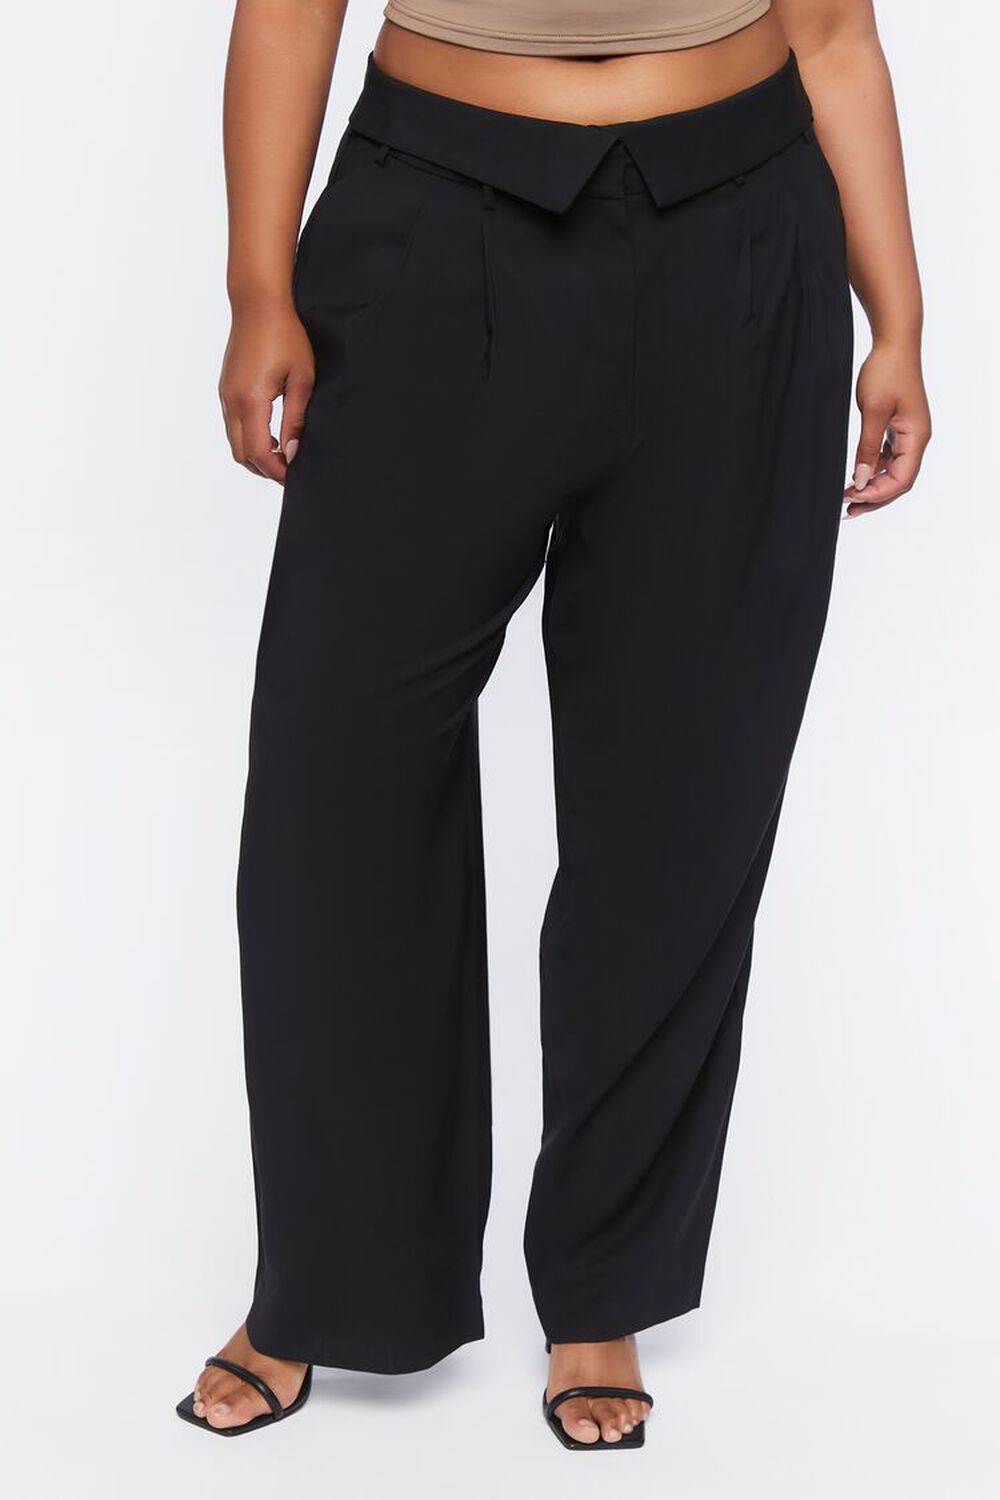 BLACK Plus Size Foldover Wide-Leg Pants, image 2